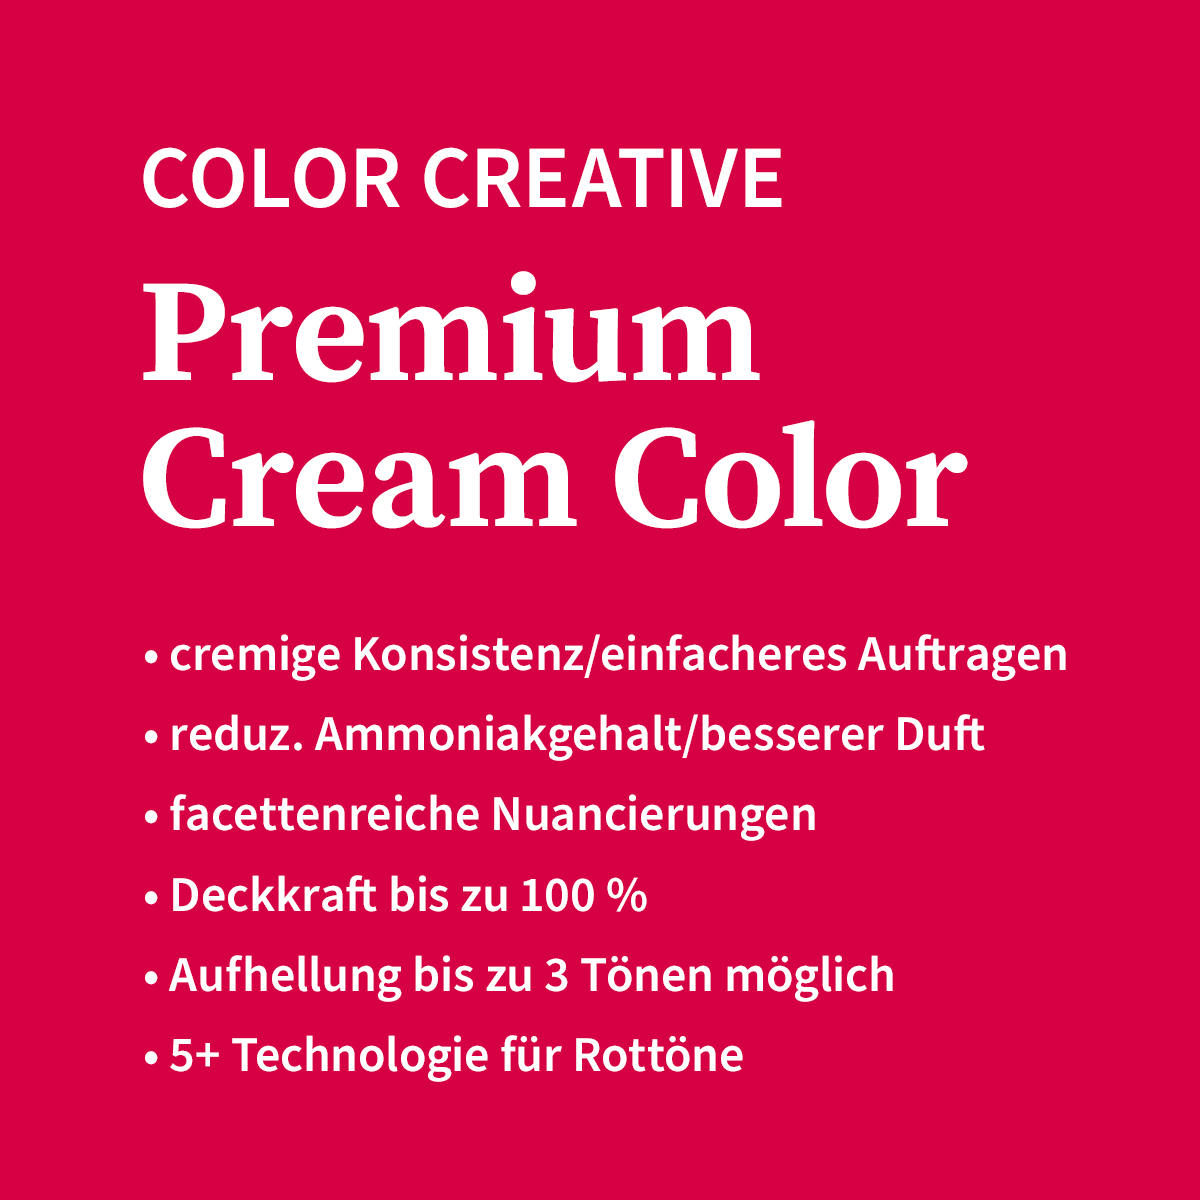 Basler Color Creative Premium Cream Color 6/6 melanzana biondo scuro viola, tubo 60 ml - 4